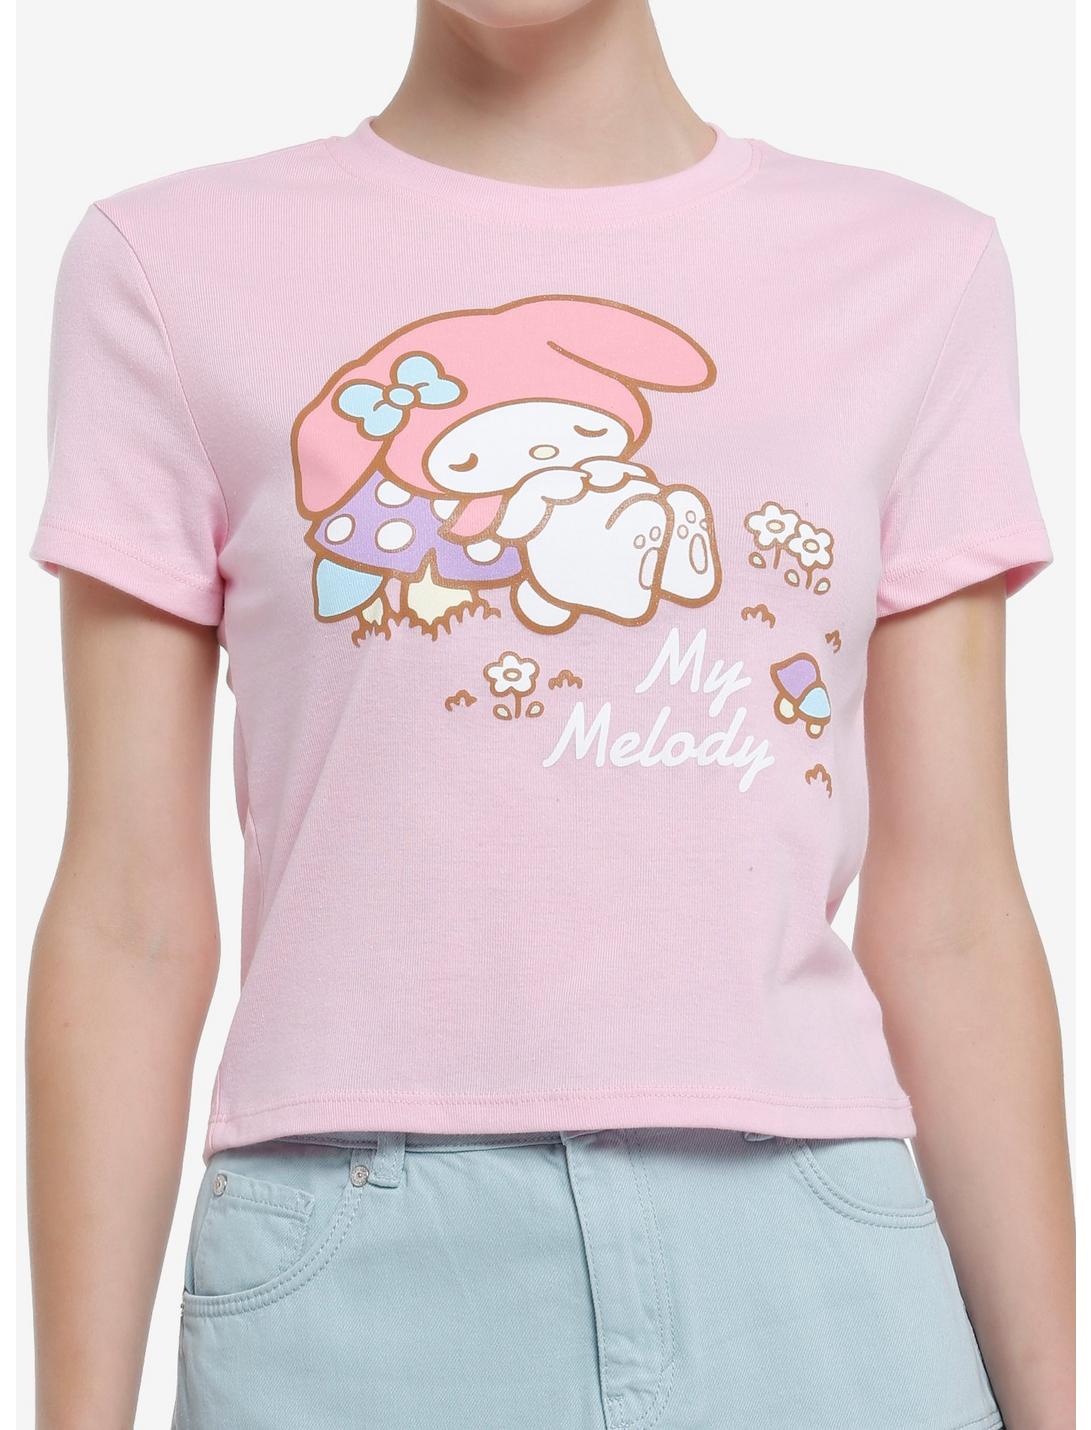 My Melody Sleeping Girls Baby T-Shirt, MULTI, hi-res